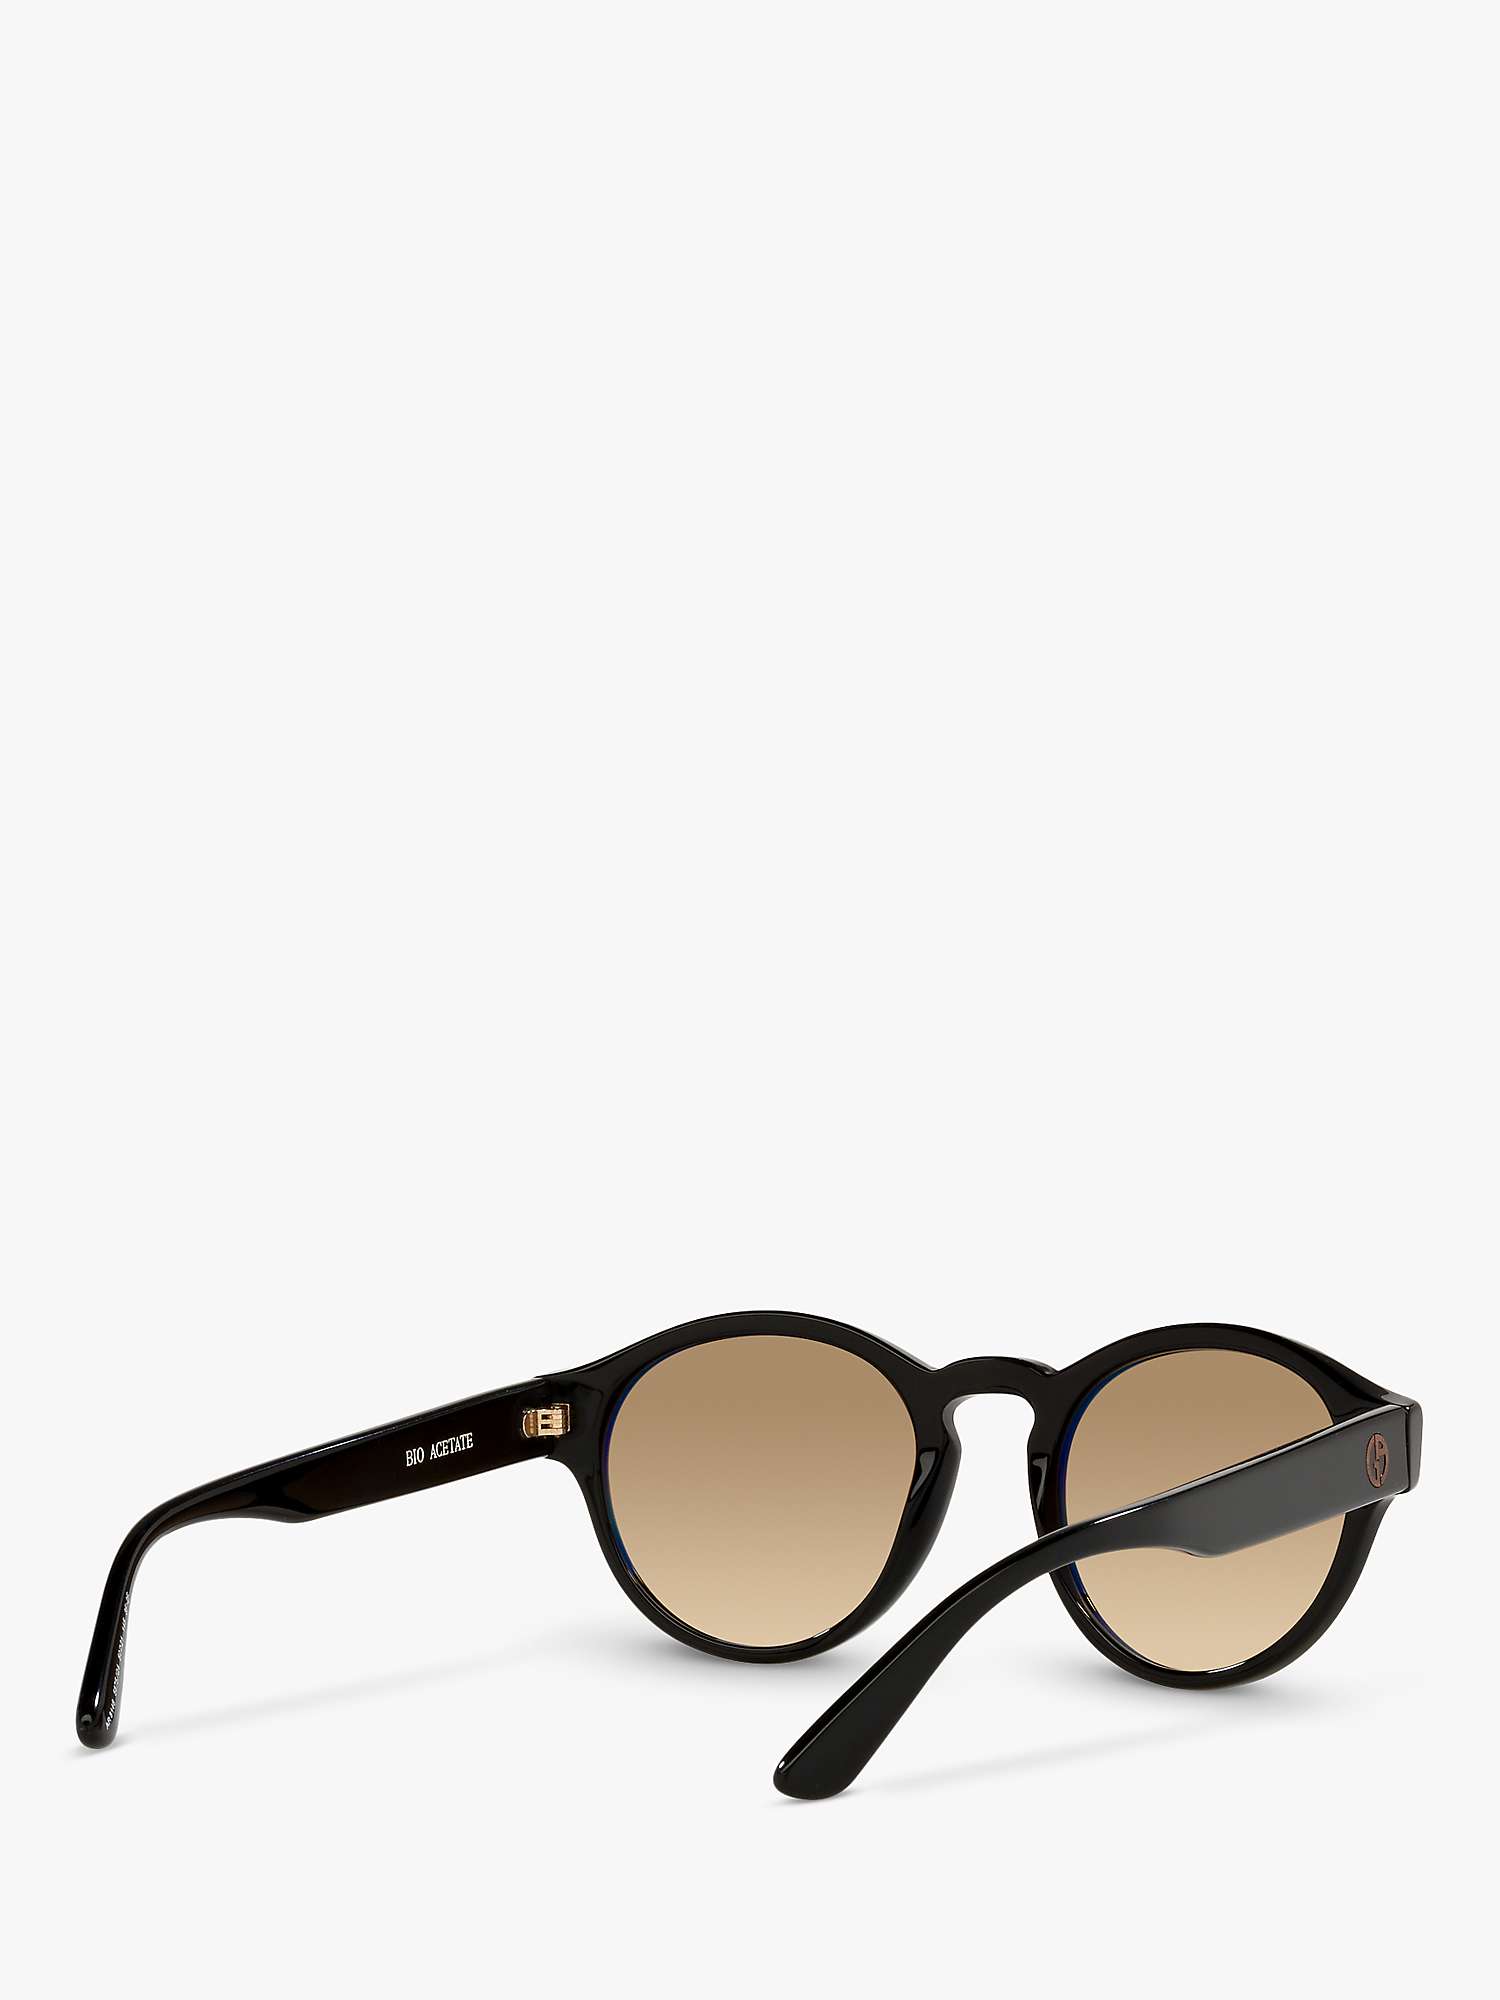 Buy Giorgio Armani AR8146 Women's Oval Sunglasses, Black/Beige Gradient Online at johnlewis.com